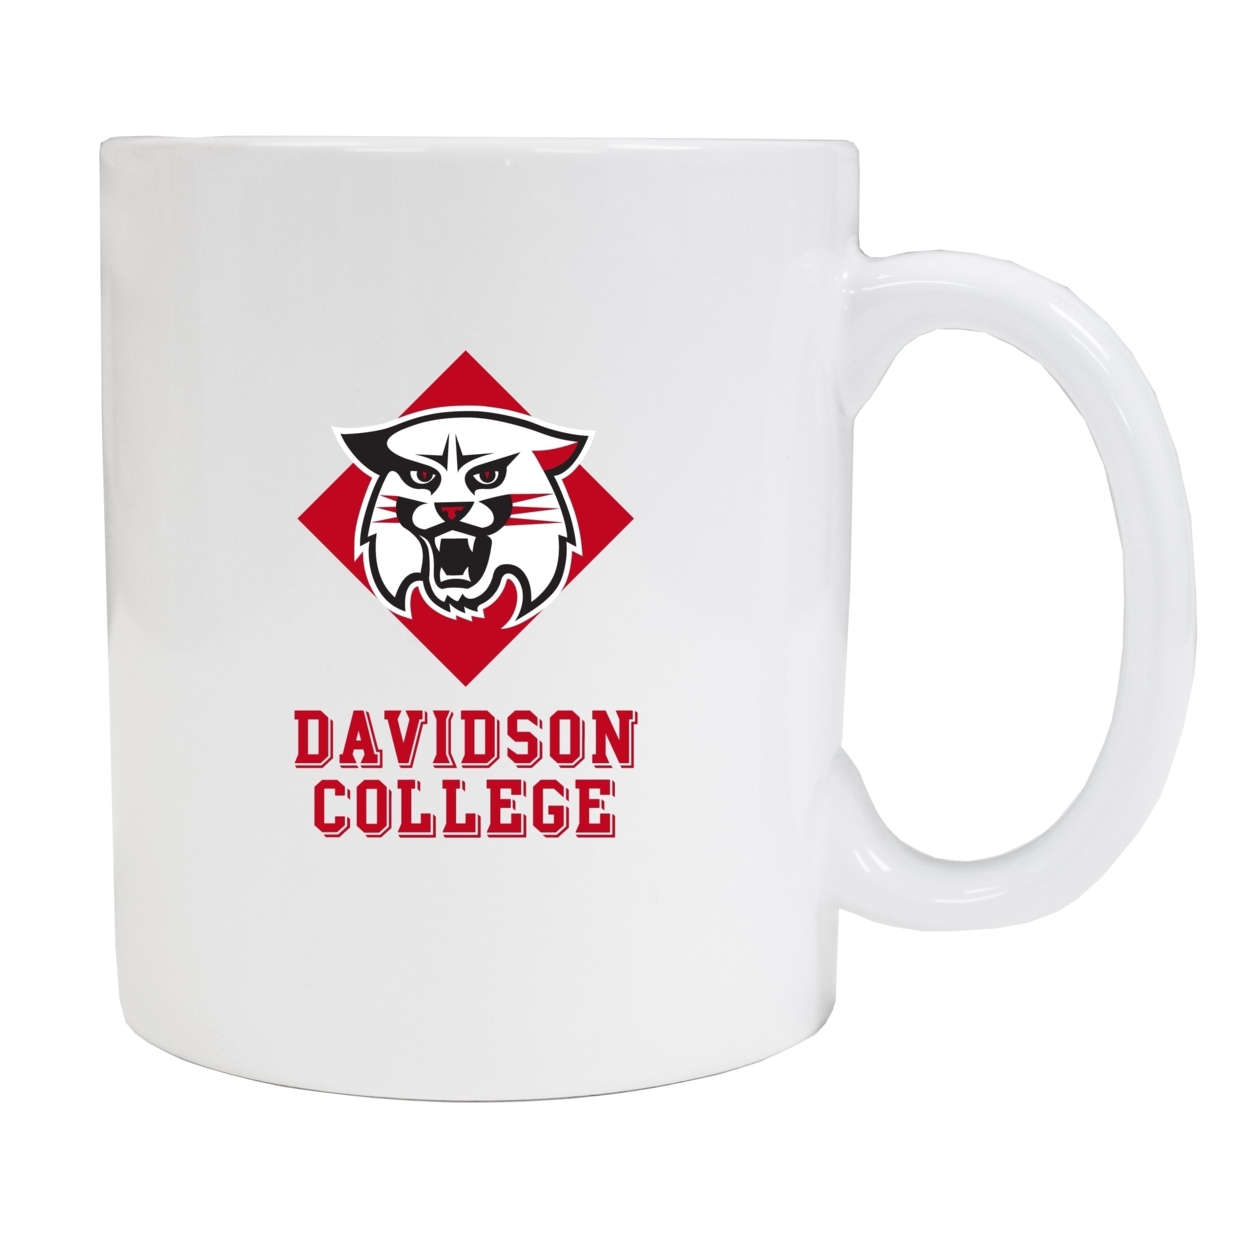 Davidson College White Ceramic Mug (White).